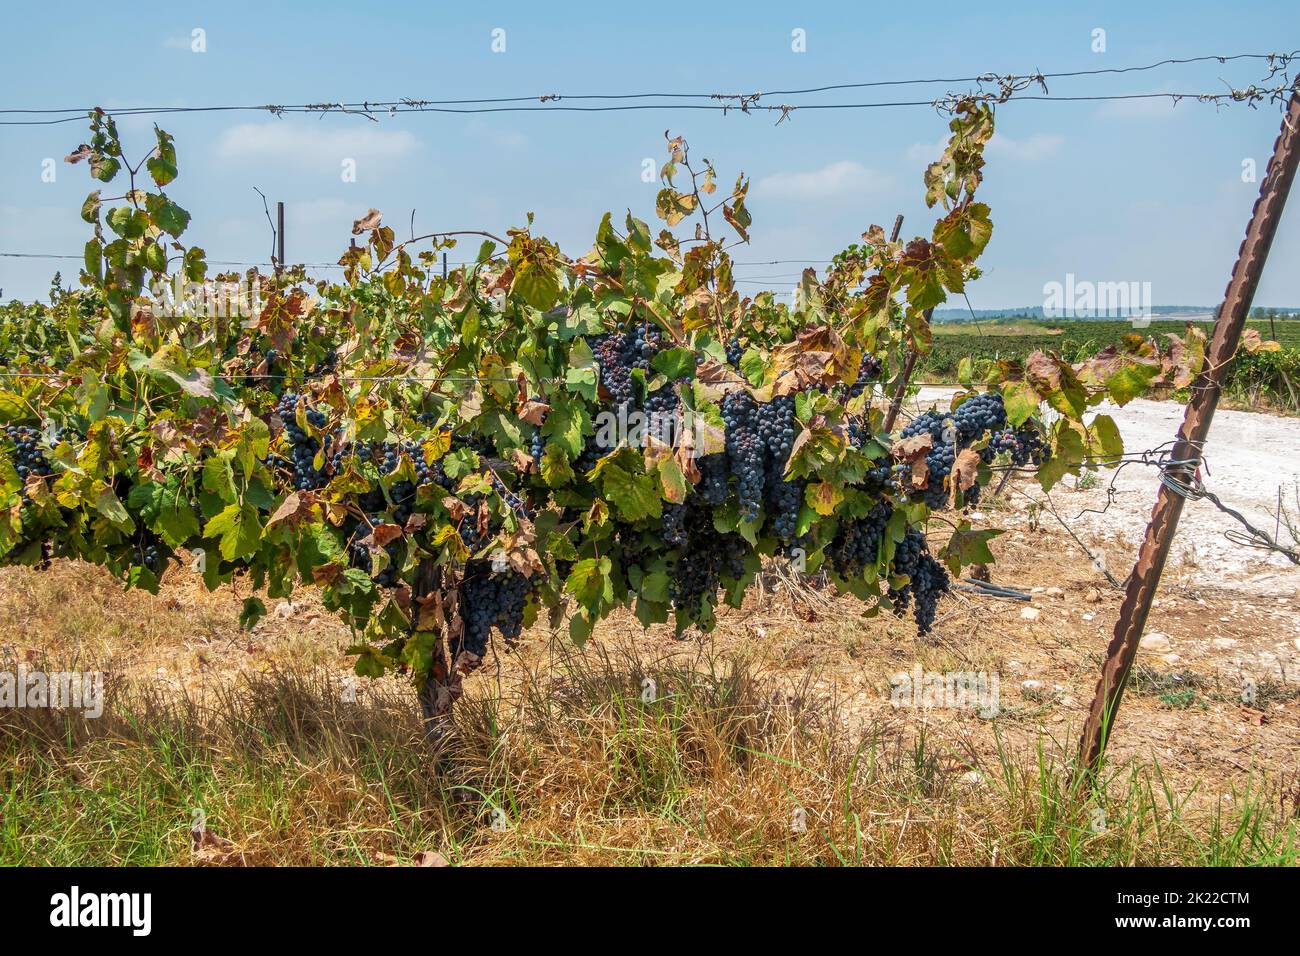 Bunches of ripe black wine grapes close-up among green foliage. Harvest season Stock Photo